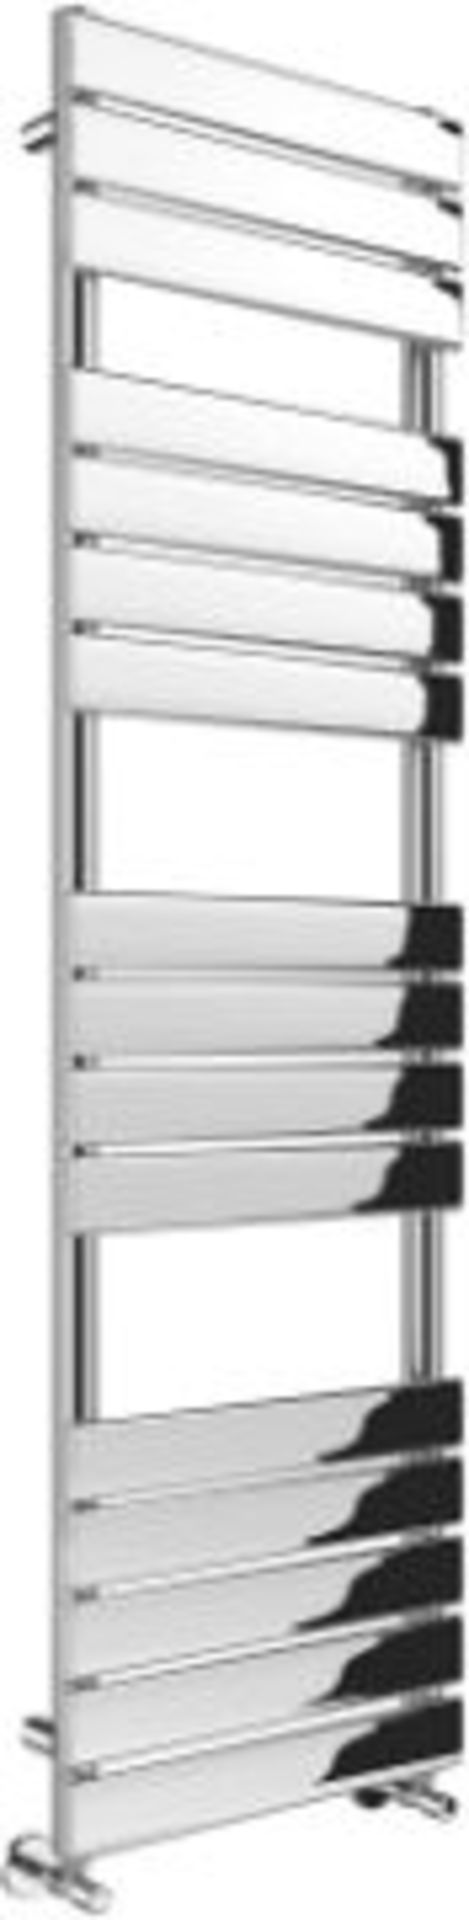 New & Boxed 1600x450mm Chrome Straight Towel Radiator Ladder Modern Bathroom. Rf1600450.Constru... - Image 2 of 2